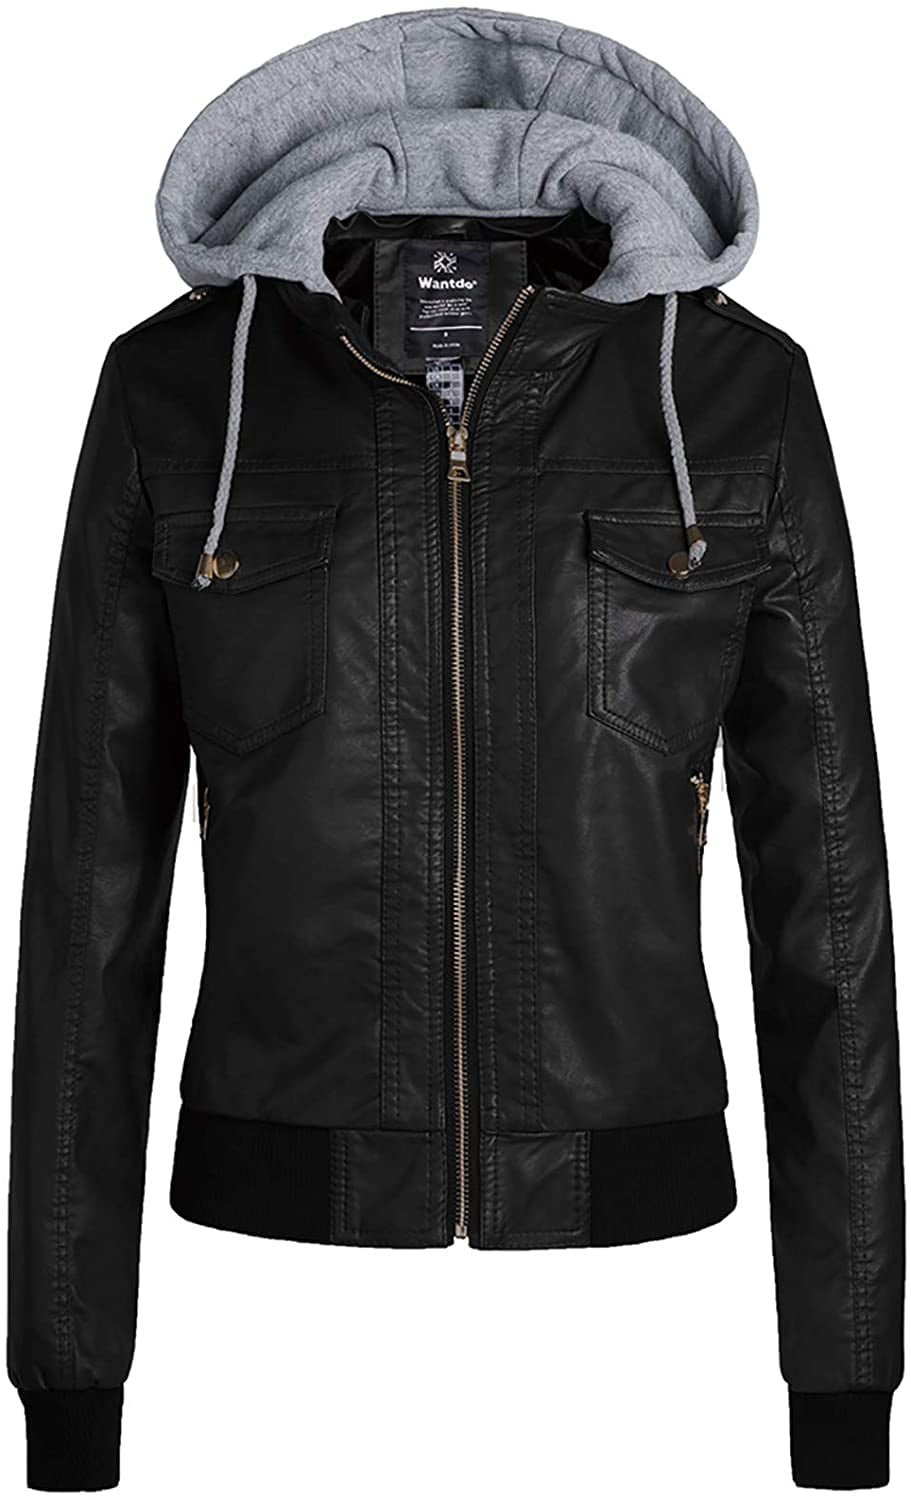 YouzhiWan007 New Hooded Faux Leather Jacket Women Autumn Winter Tops Motorcycle Jackets Hat Detachable Slim Coat Outwear Plus Size 